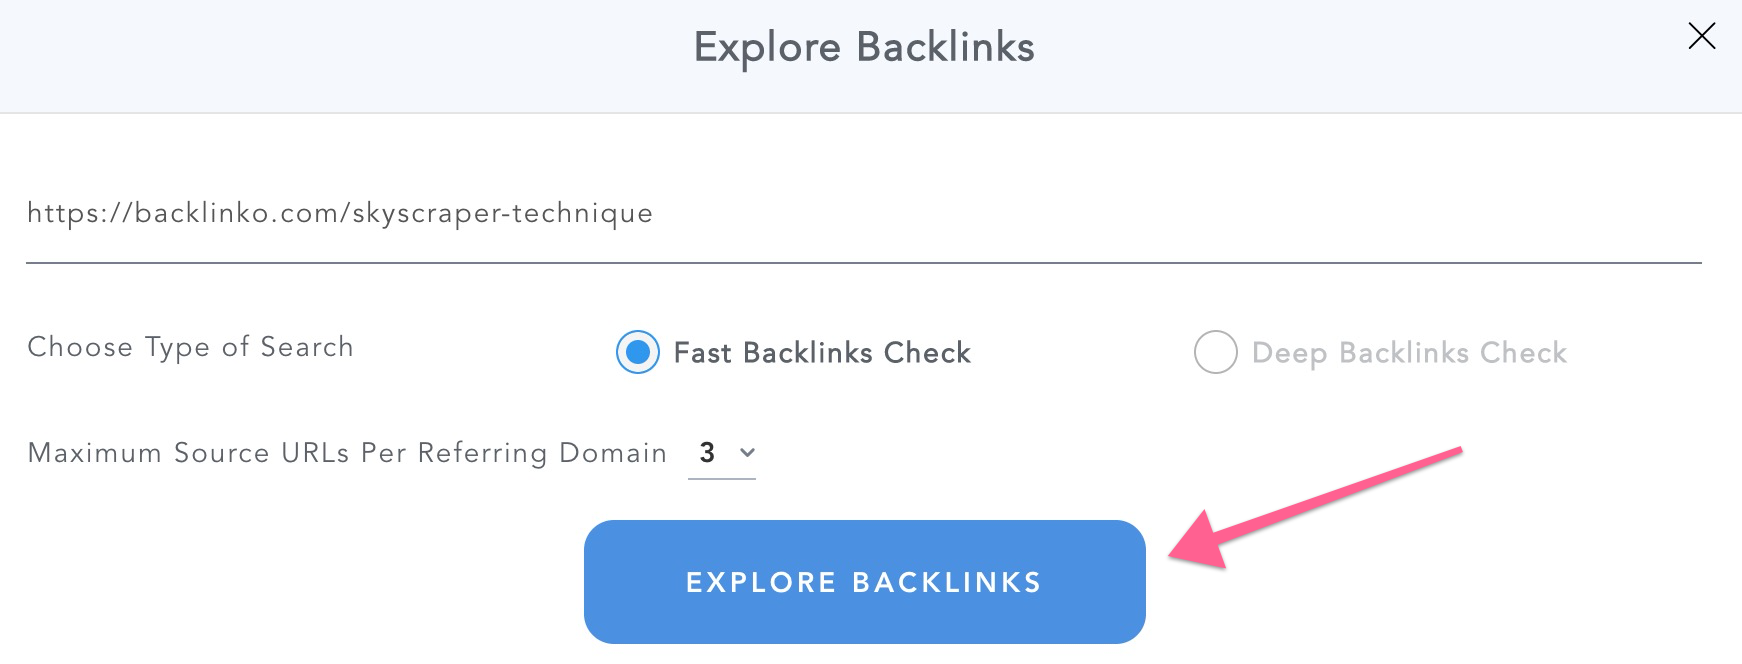 Explore Backlinks 2